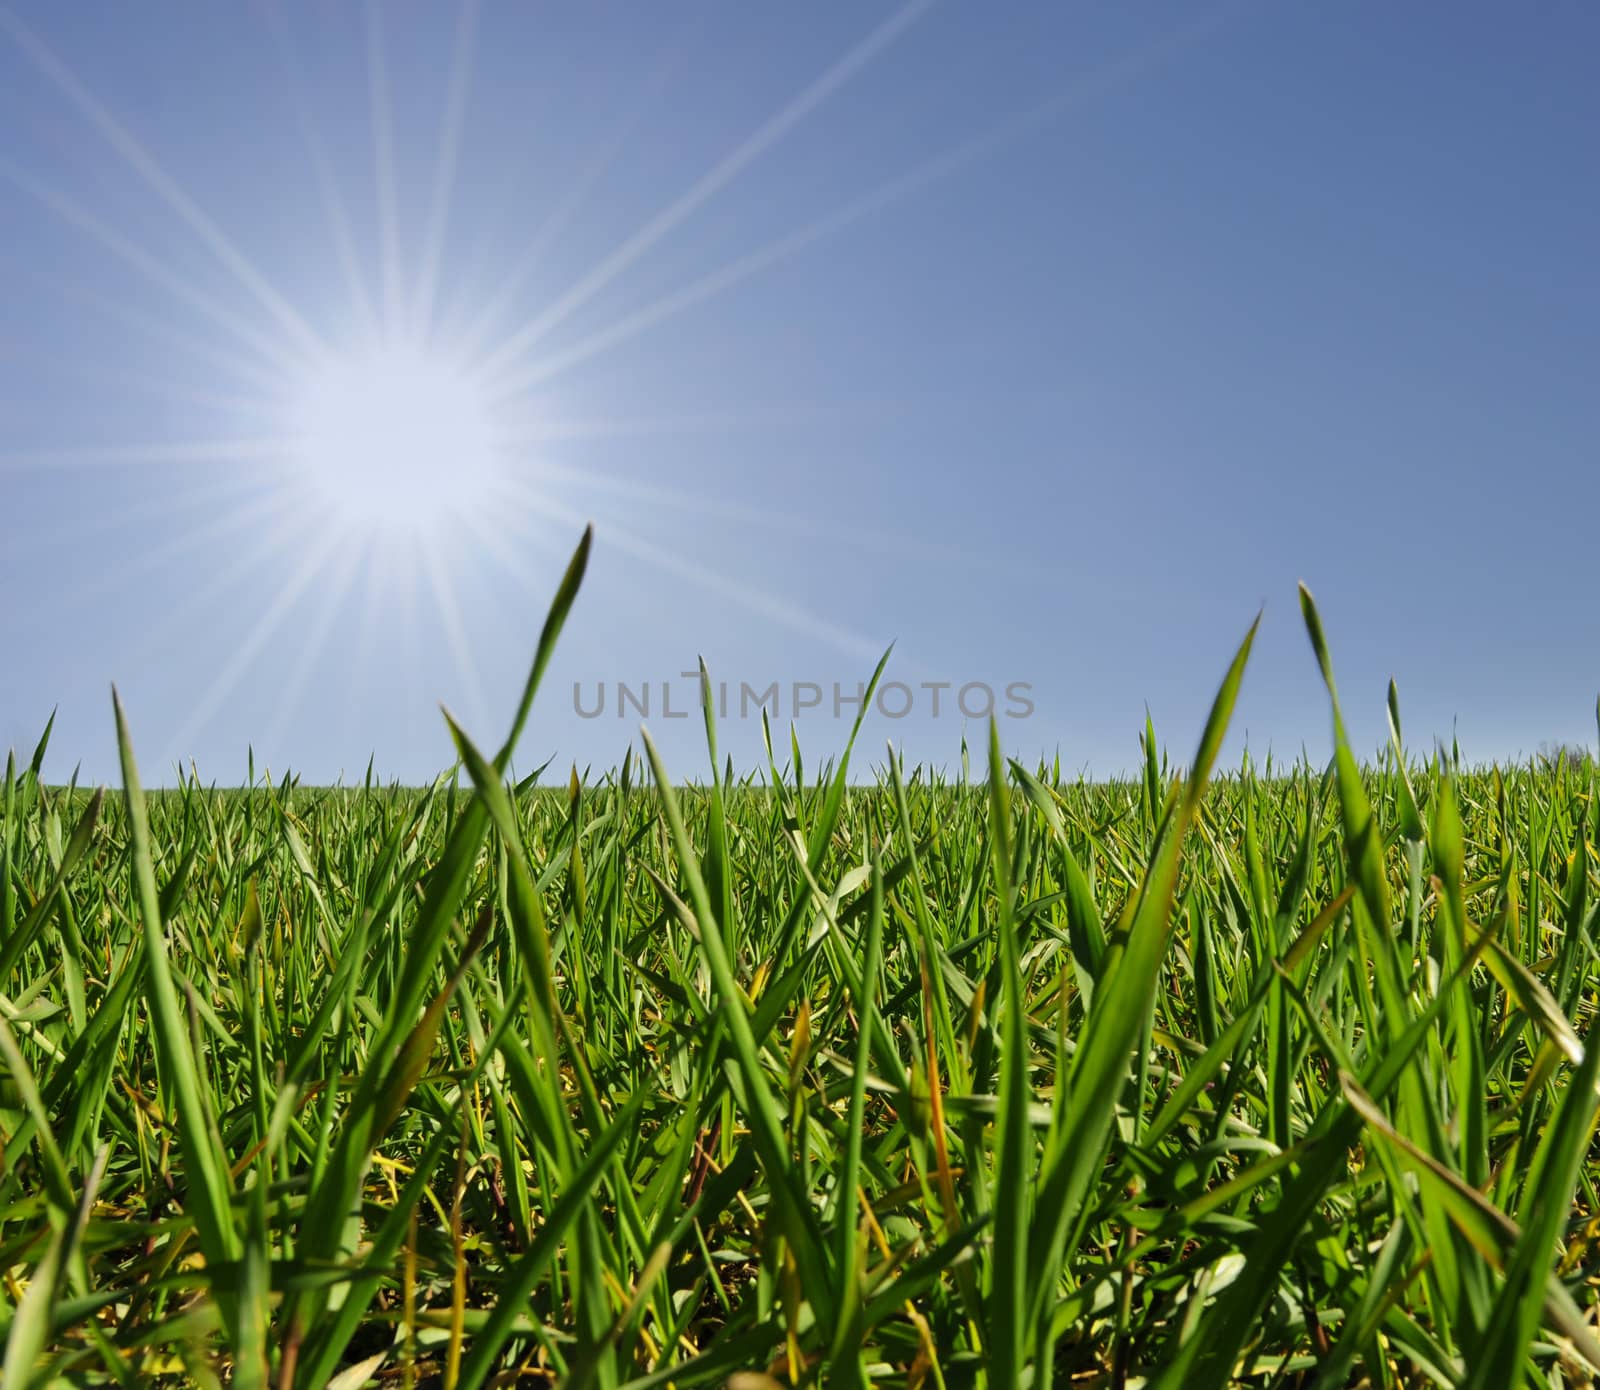 Closeup grassfield with bright shining sun